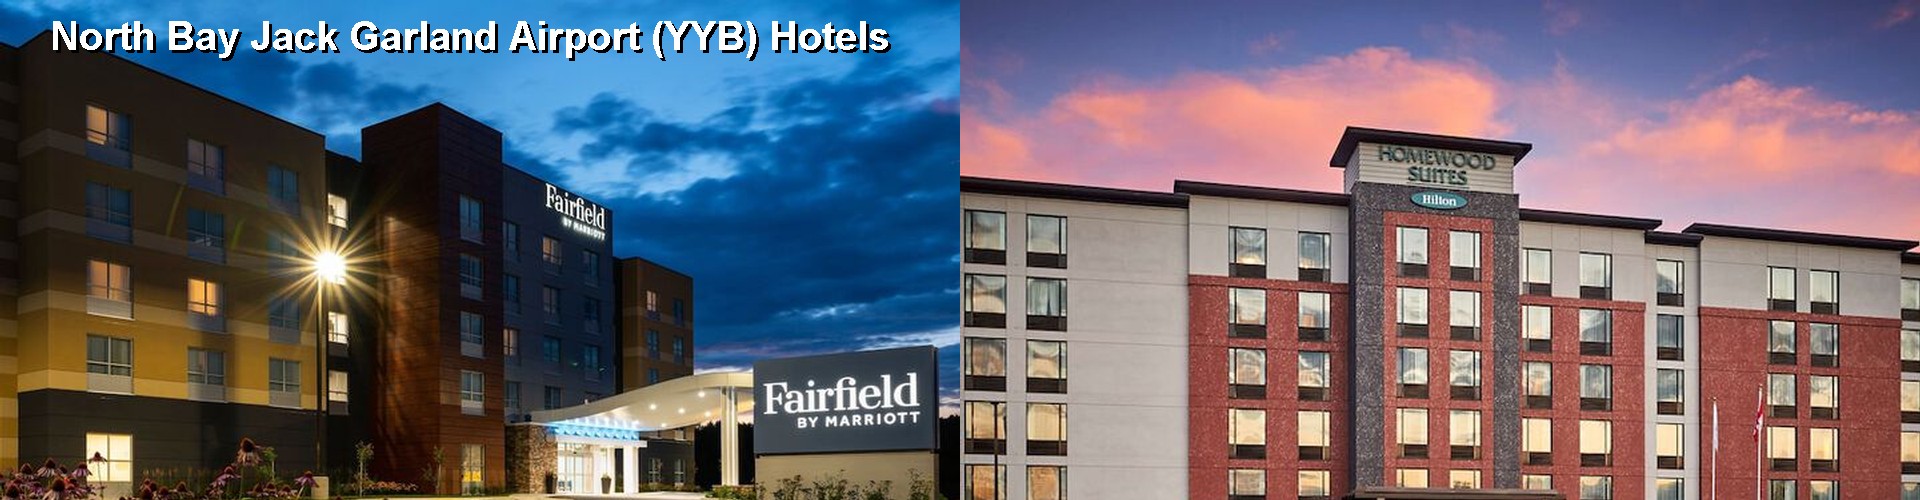 4 Best Hotels near North Bay Jack Garland Airport (YYB)